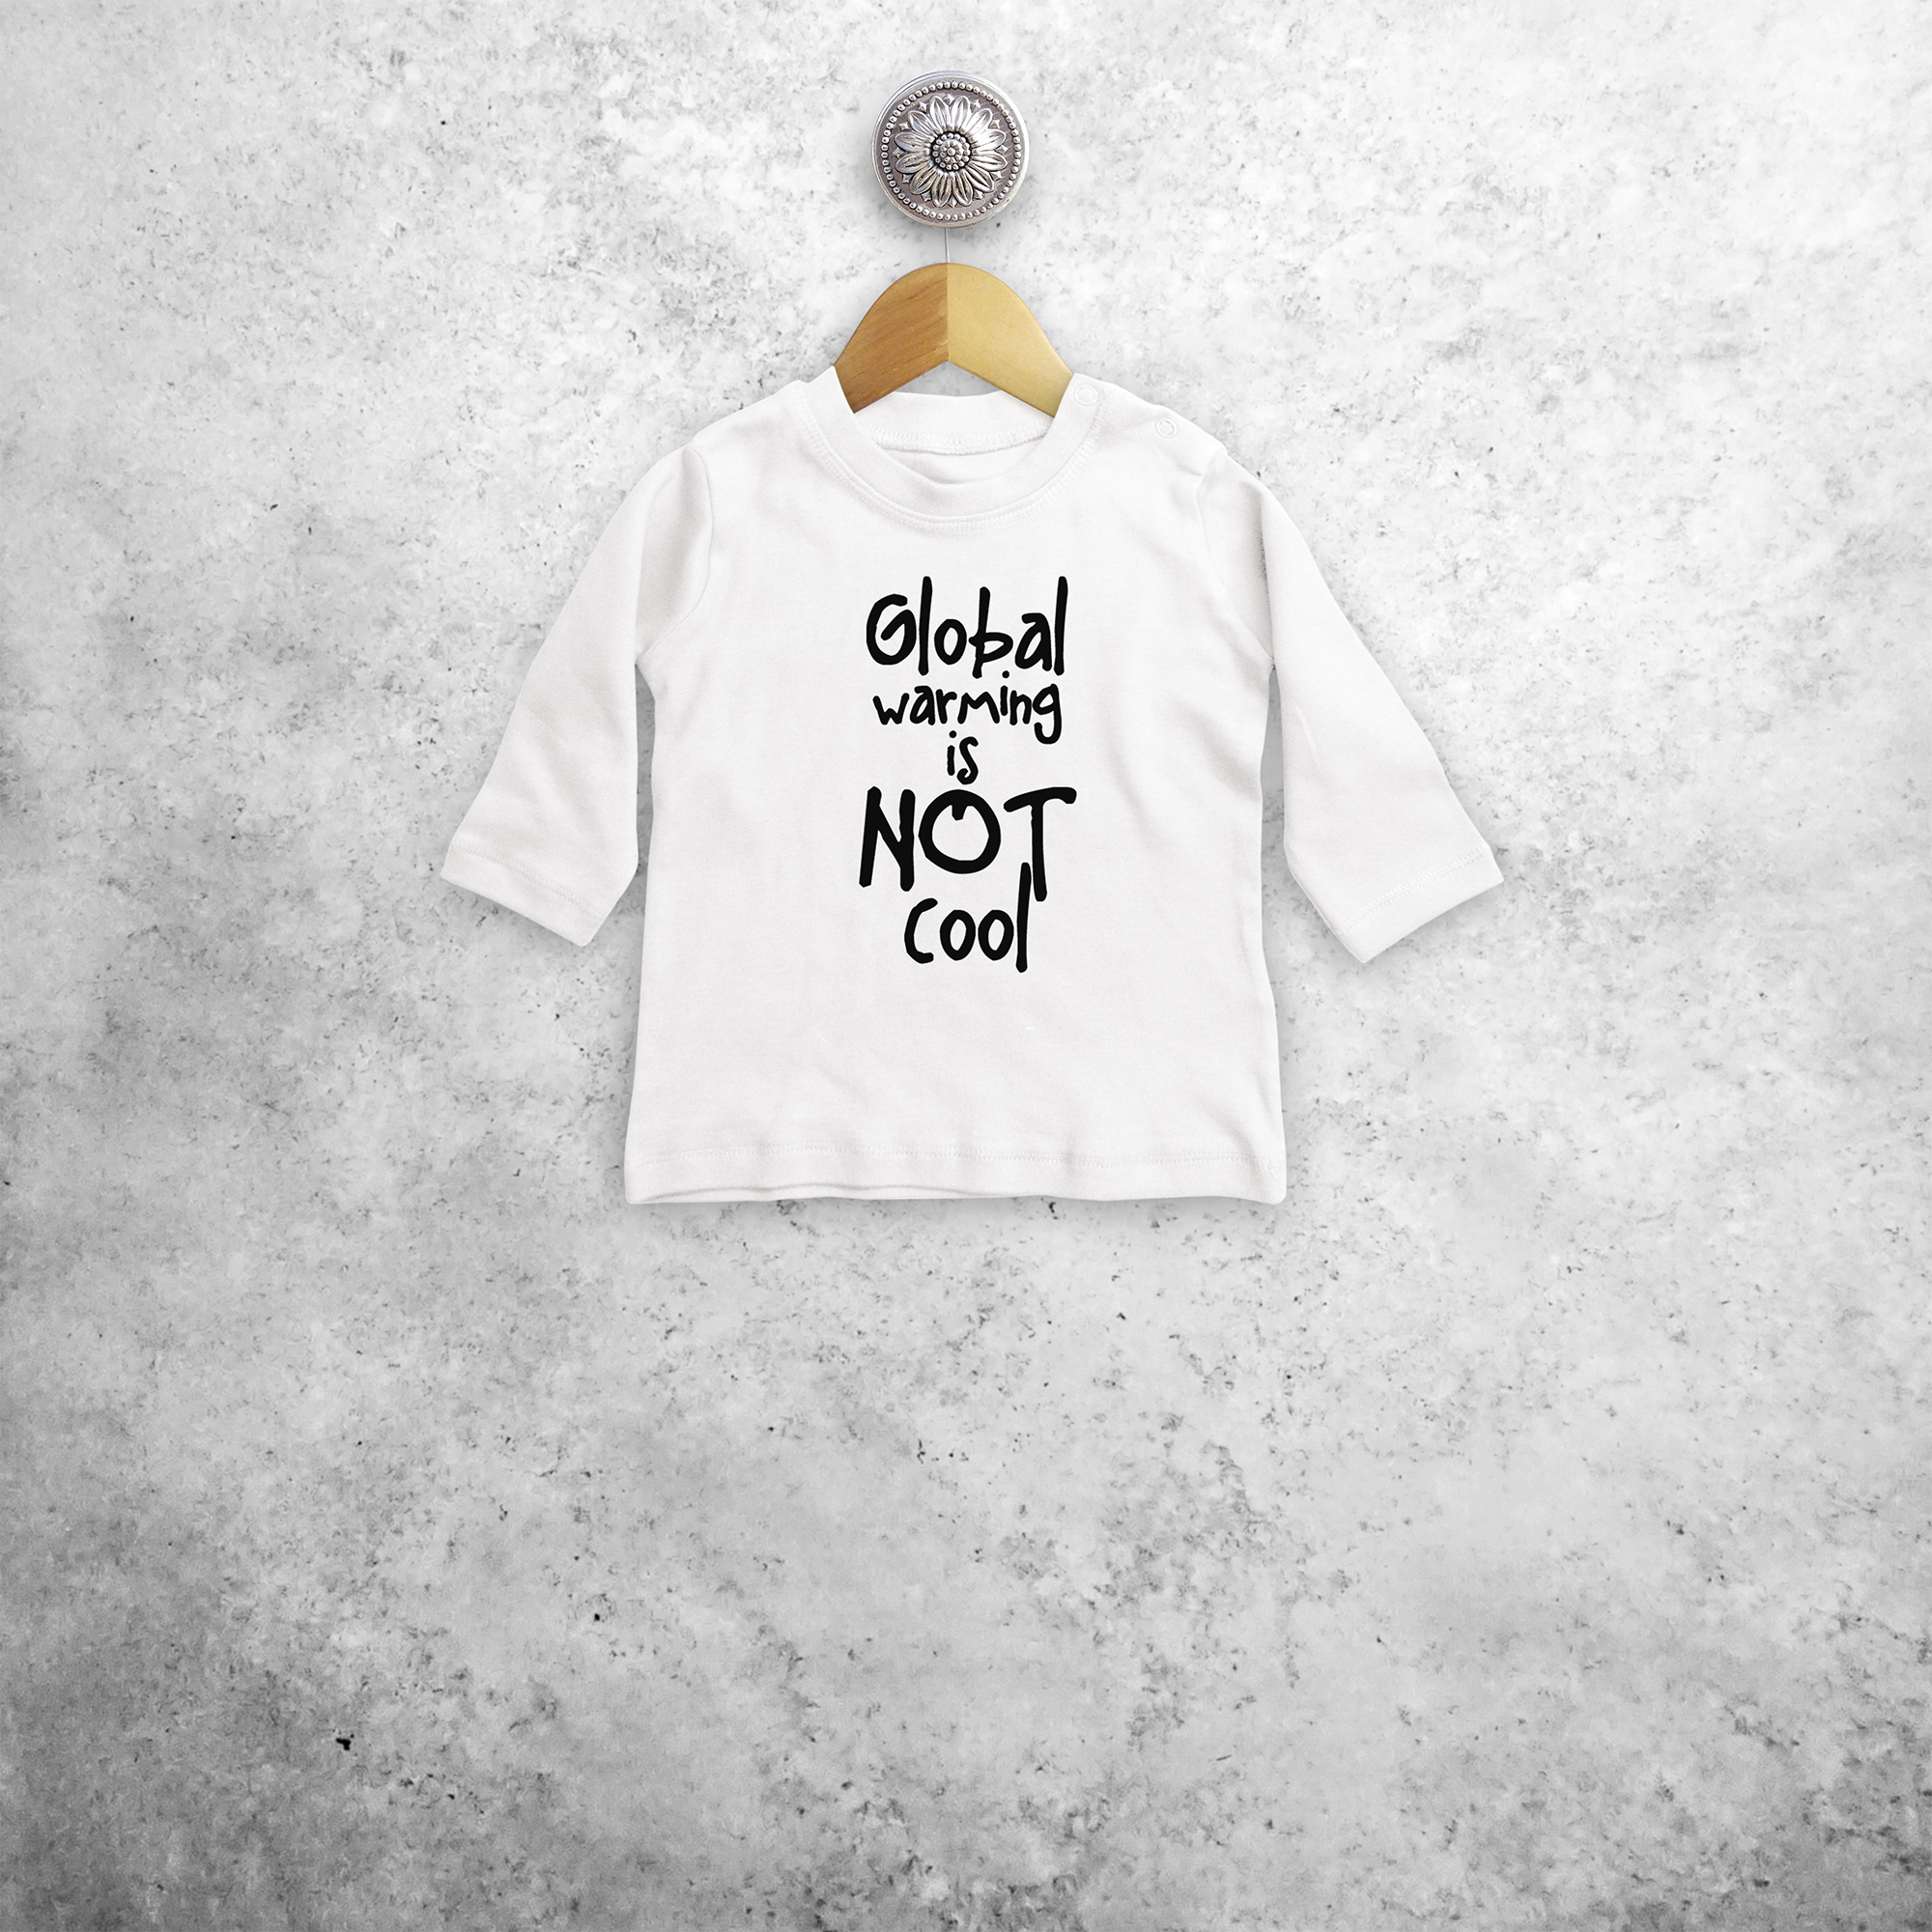 'Global warming is not cool' baby longsleeve shirt